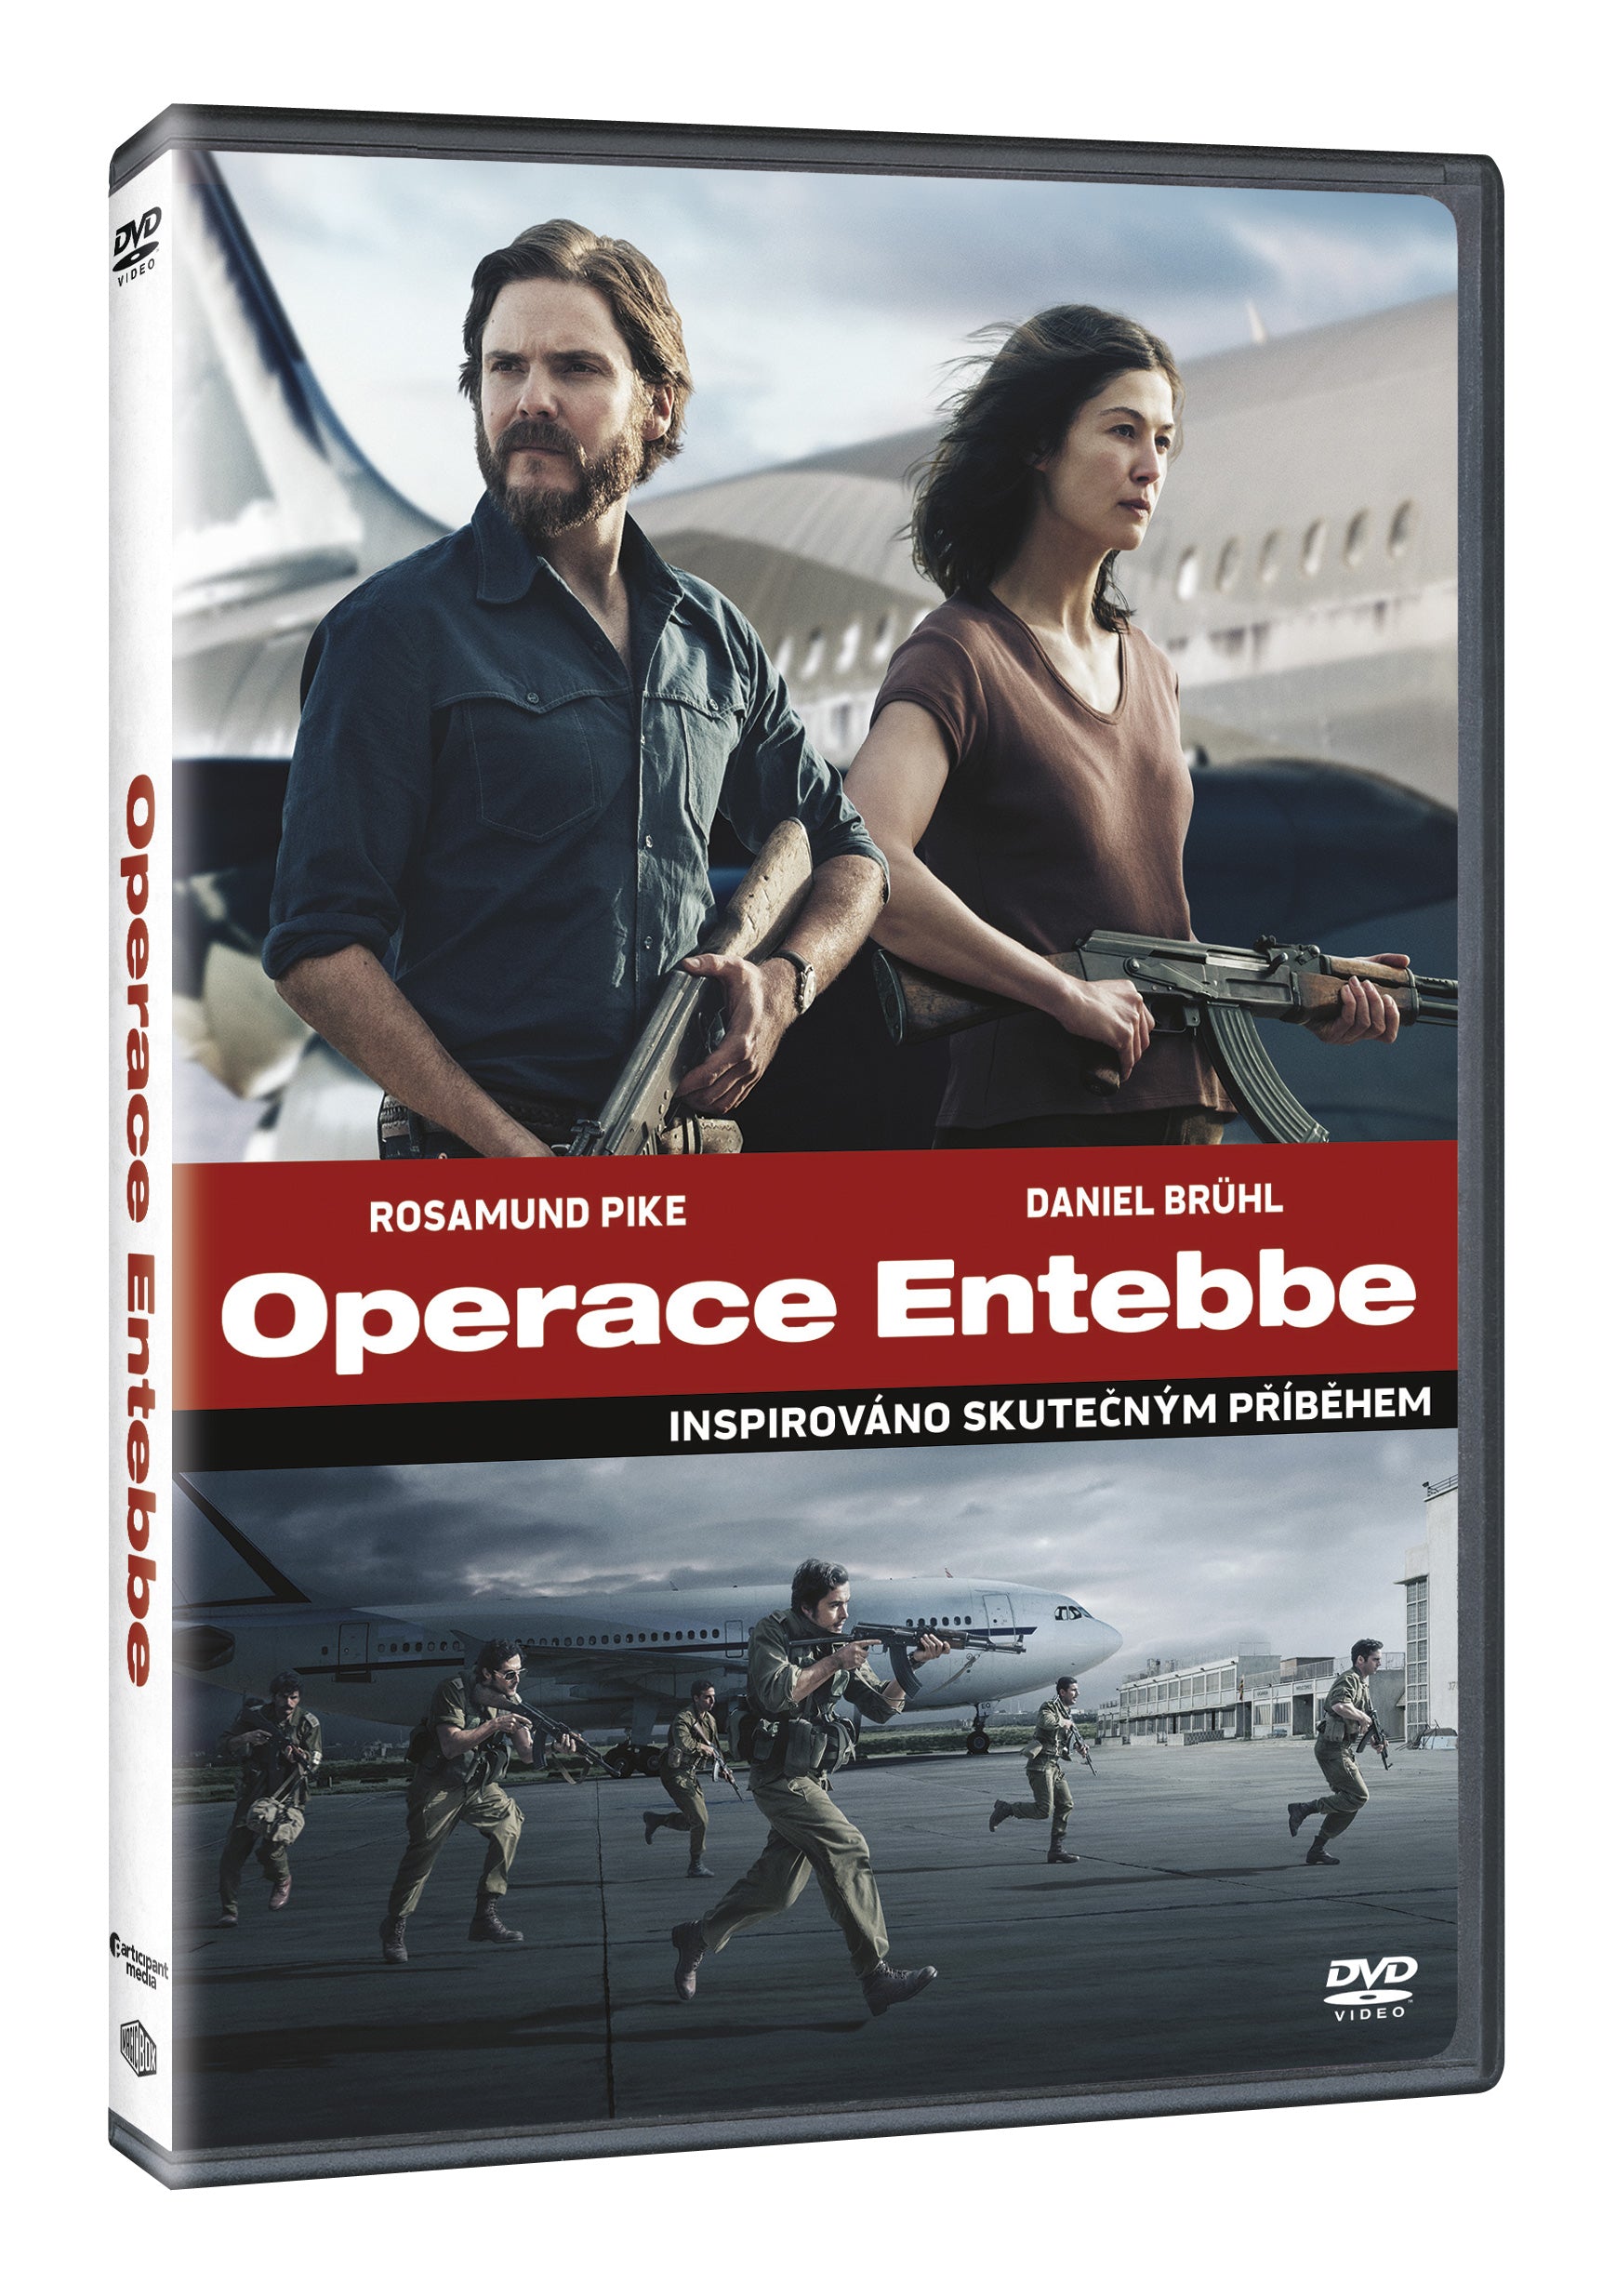 Operace Entebbe DVD / 7 days in Entebbe